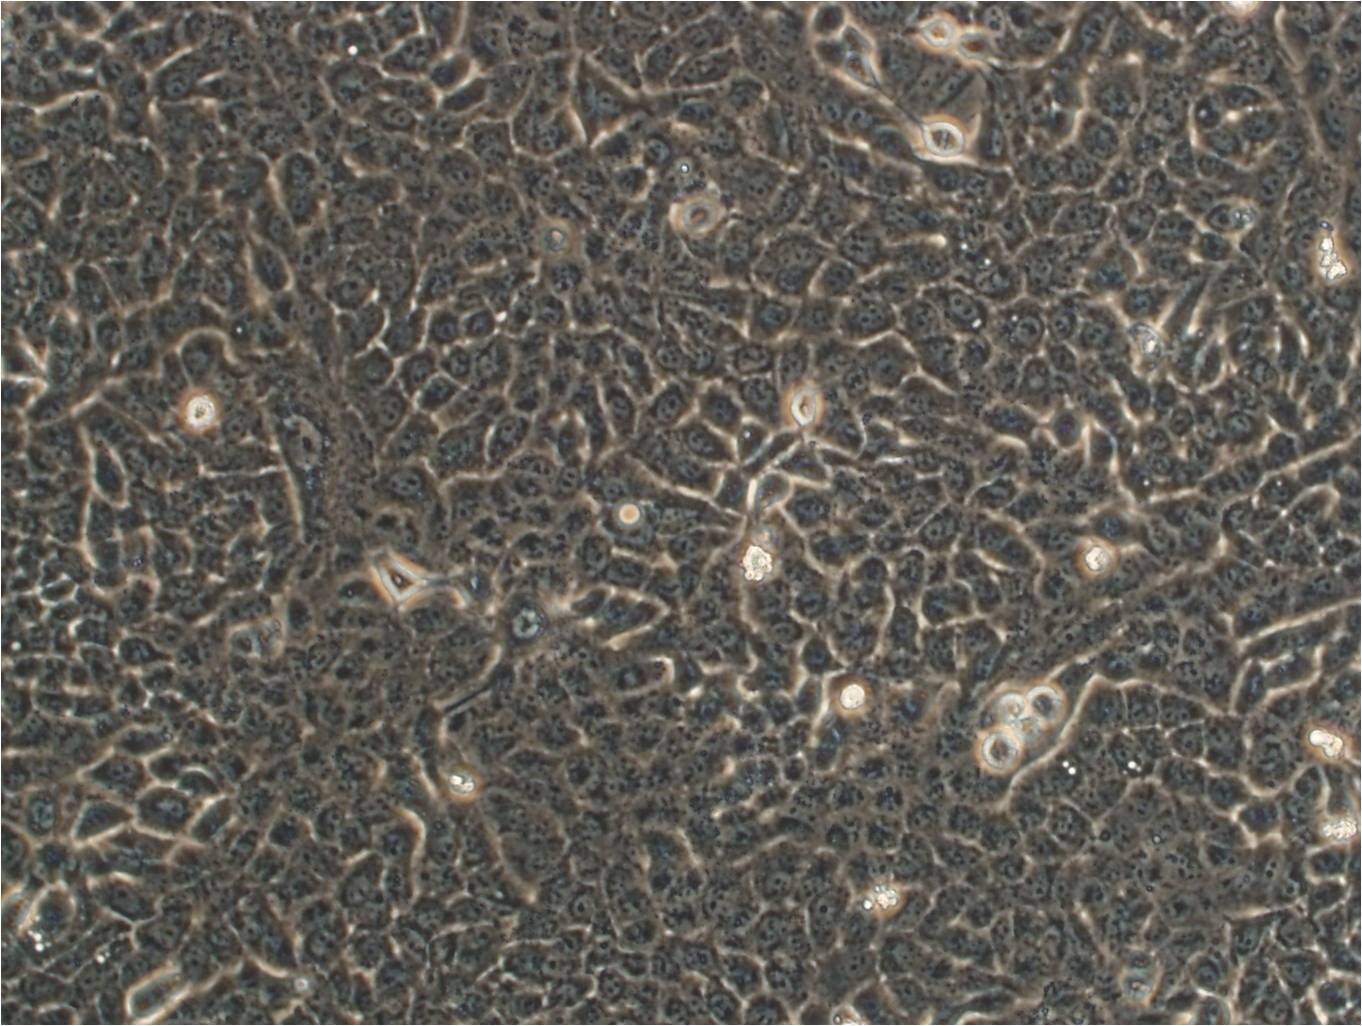 SNU-620 epithelioid cells人胃癌细胞系,SNU-620 epithelioid cells